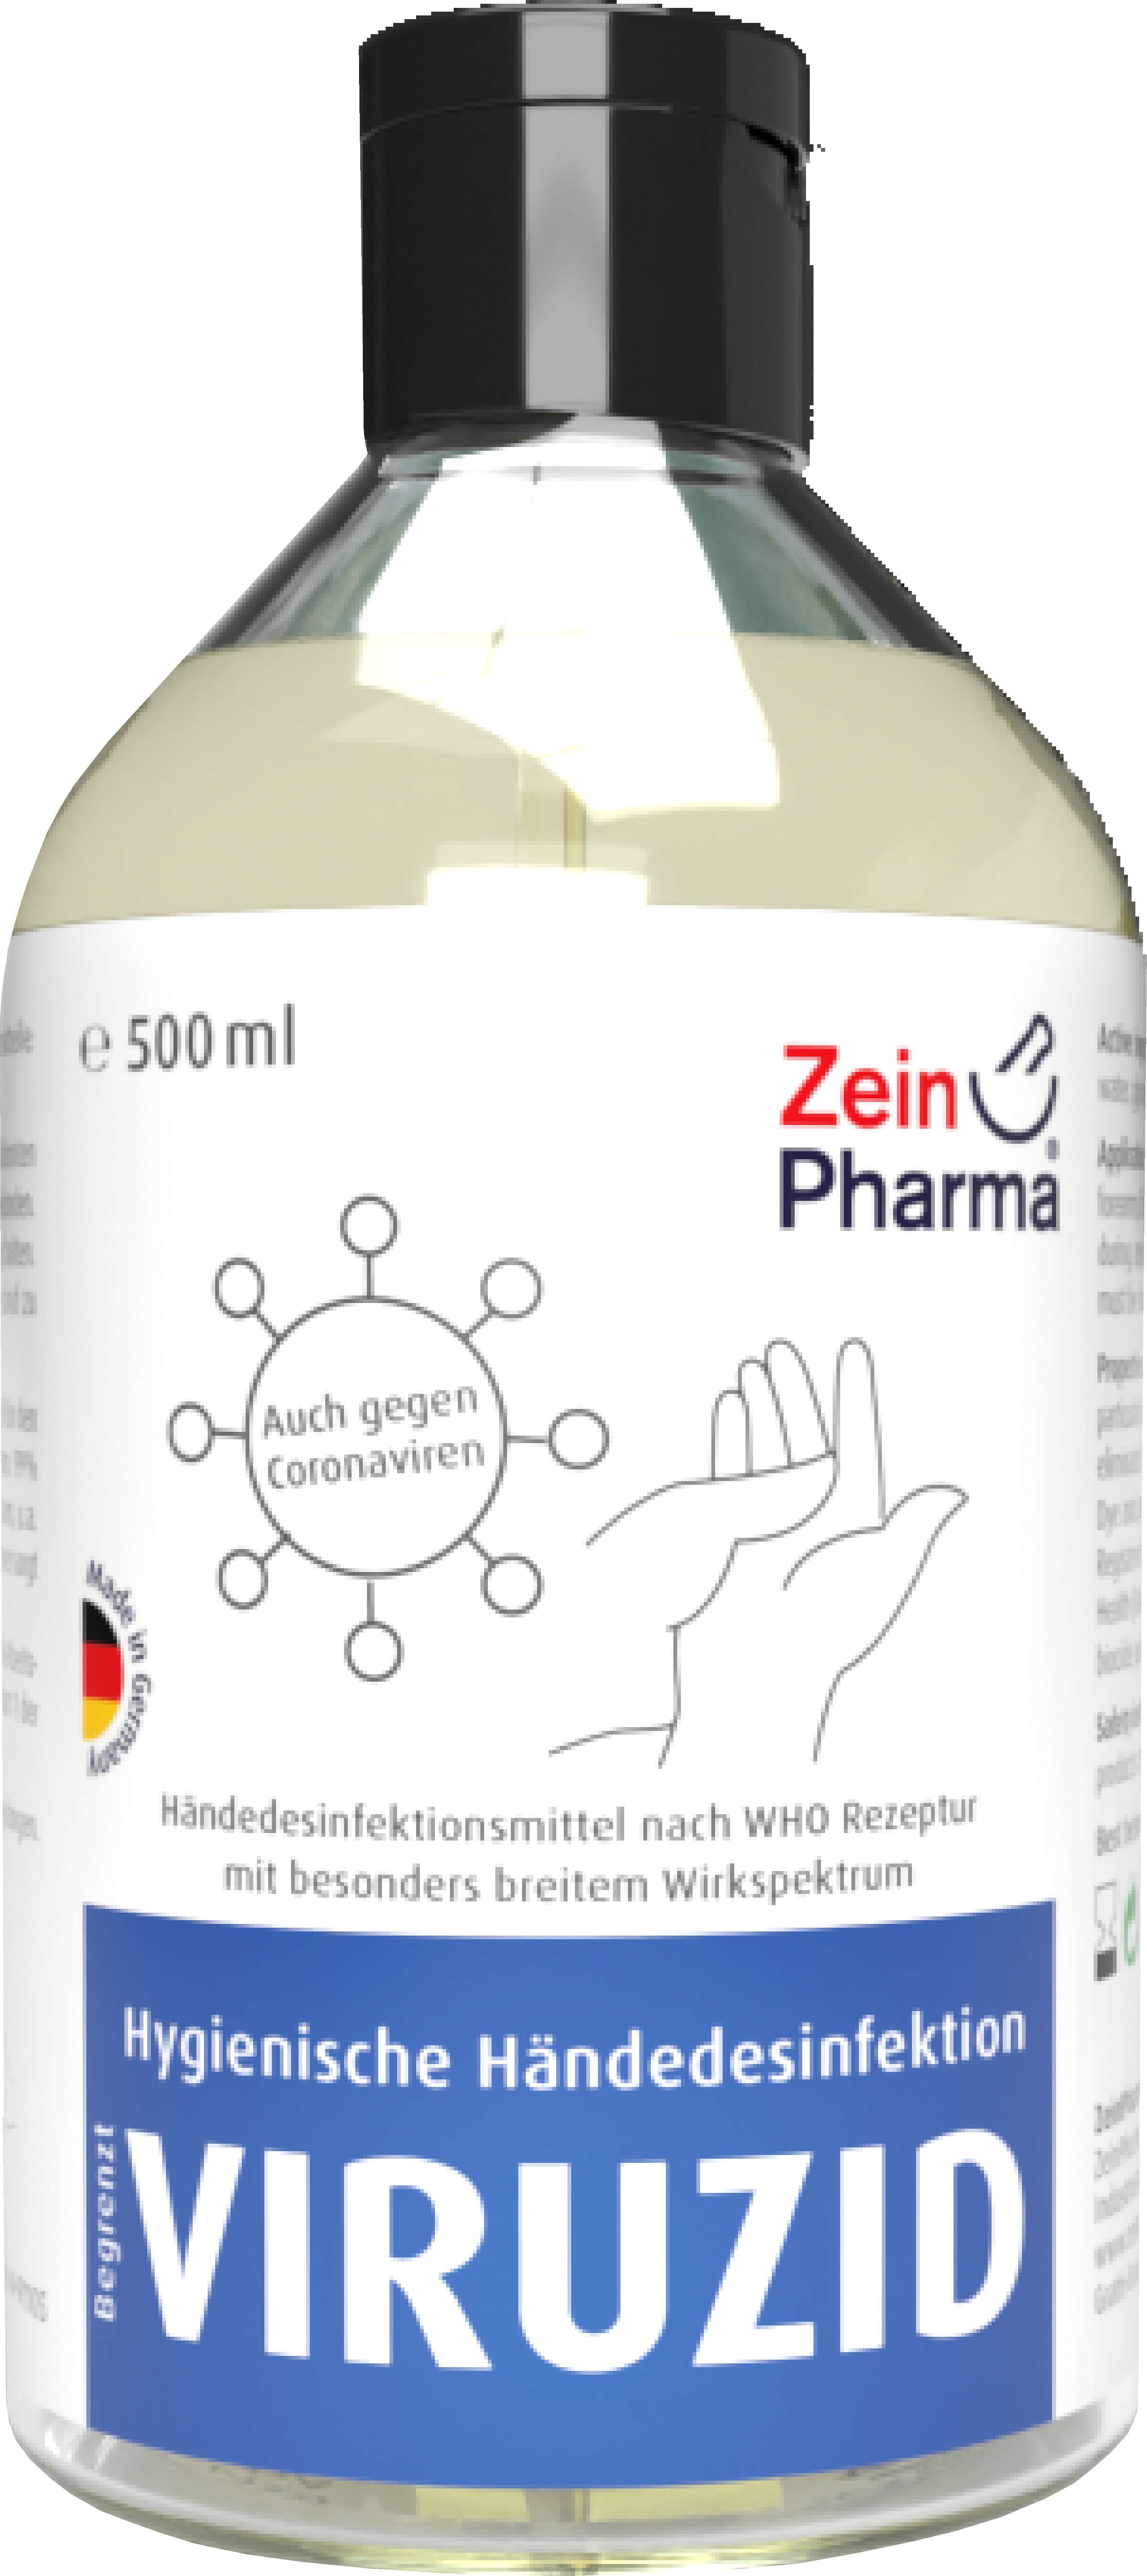 Händedesinfektionsmittel Nach Who Zeinpharma Fluid 500 ml - ab 0,00 €